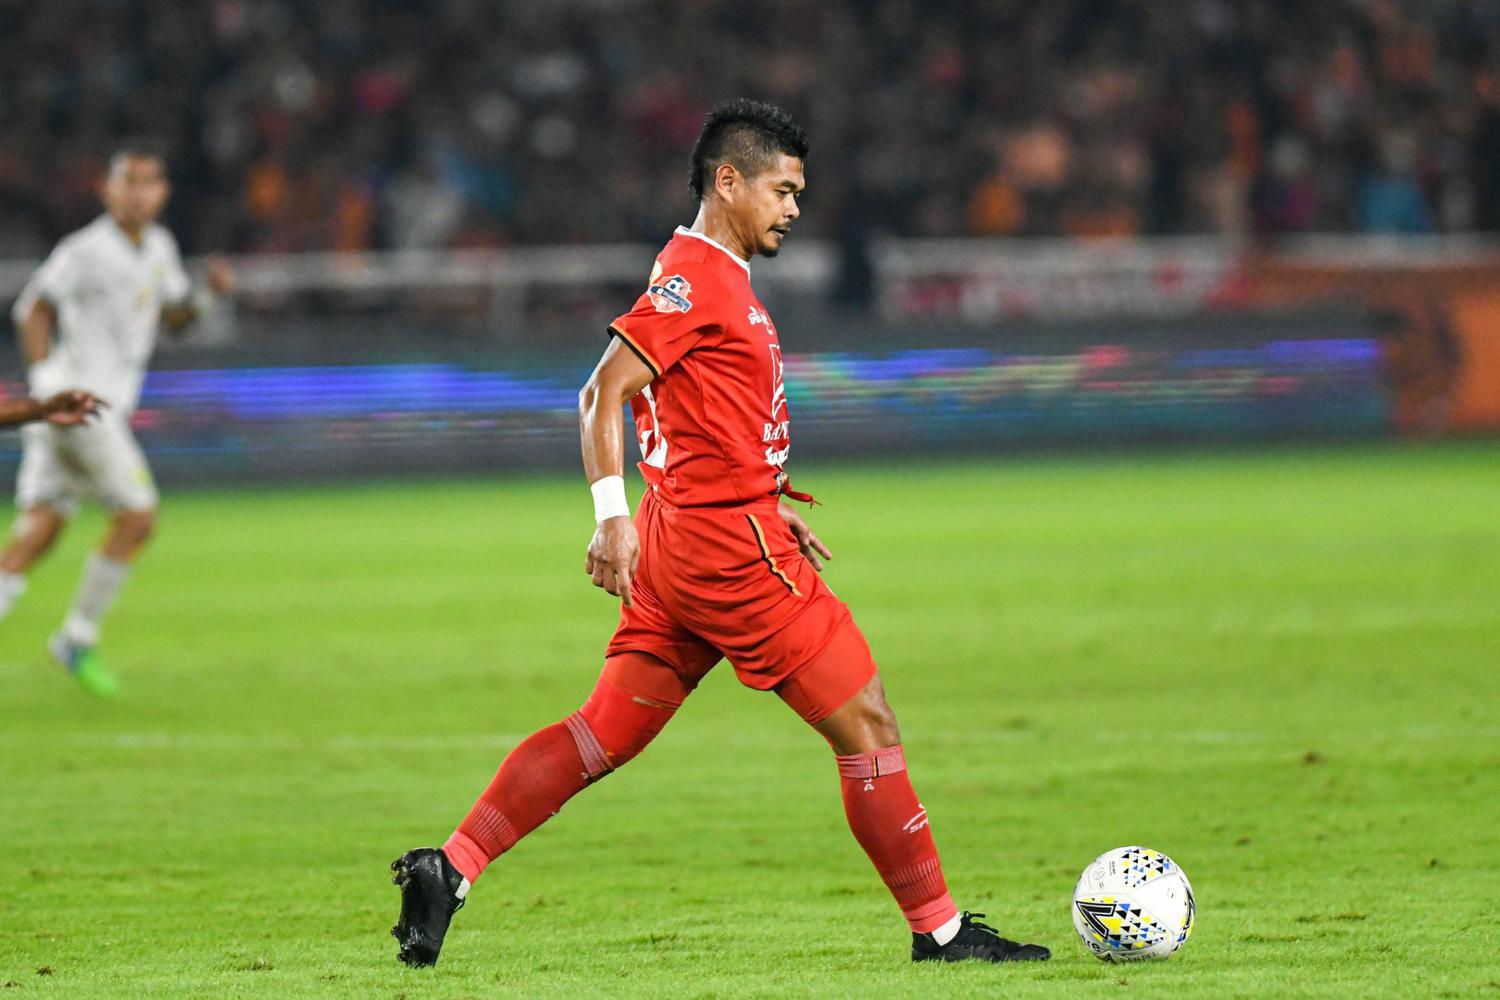 Sepanjang kariernya, Bambang Pamungkas sudah mencetak 200 gol untuk Persija Jakarta. Bersama timnas Indonesia, dia masuk jajaran pencetak gol terbanyak sepanjang sejarah dengan 36 gol.